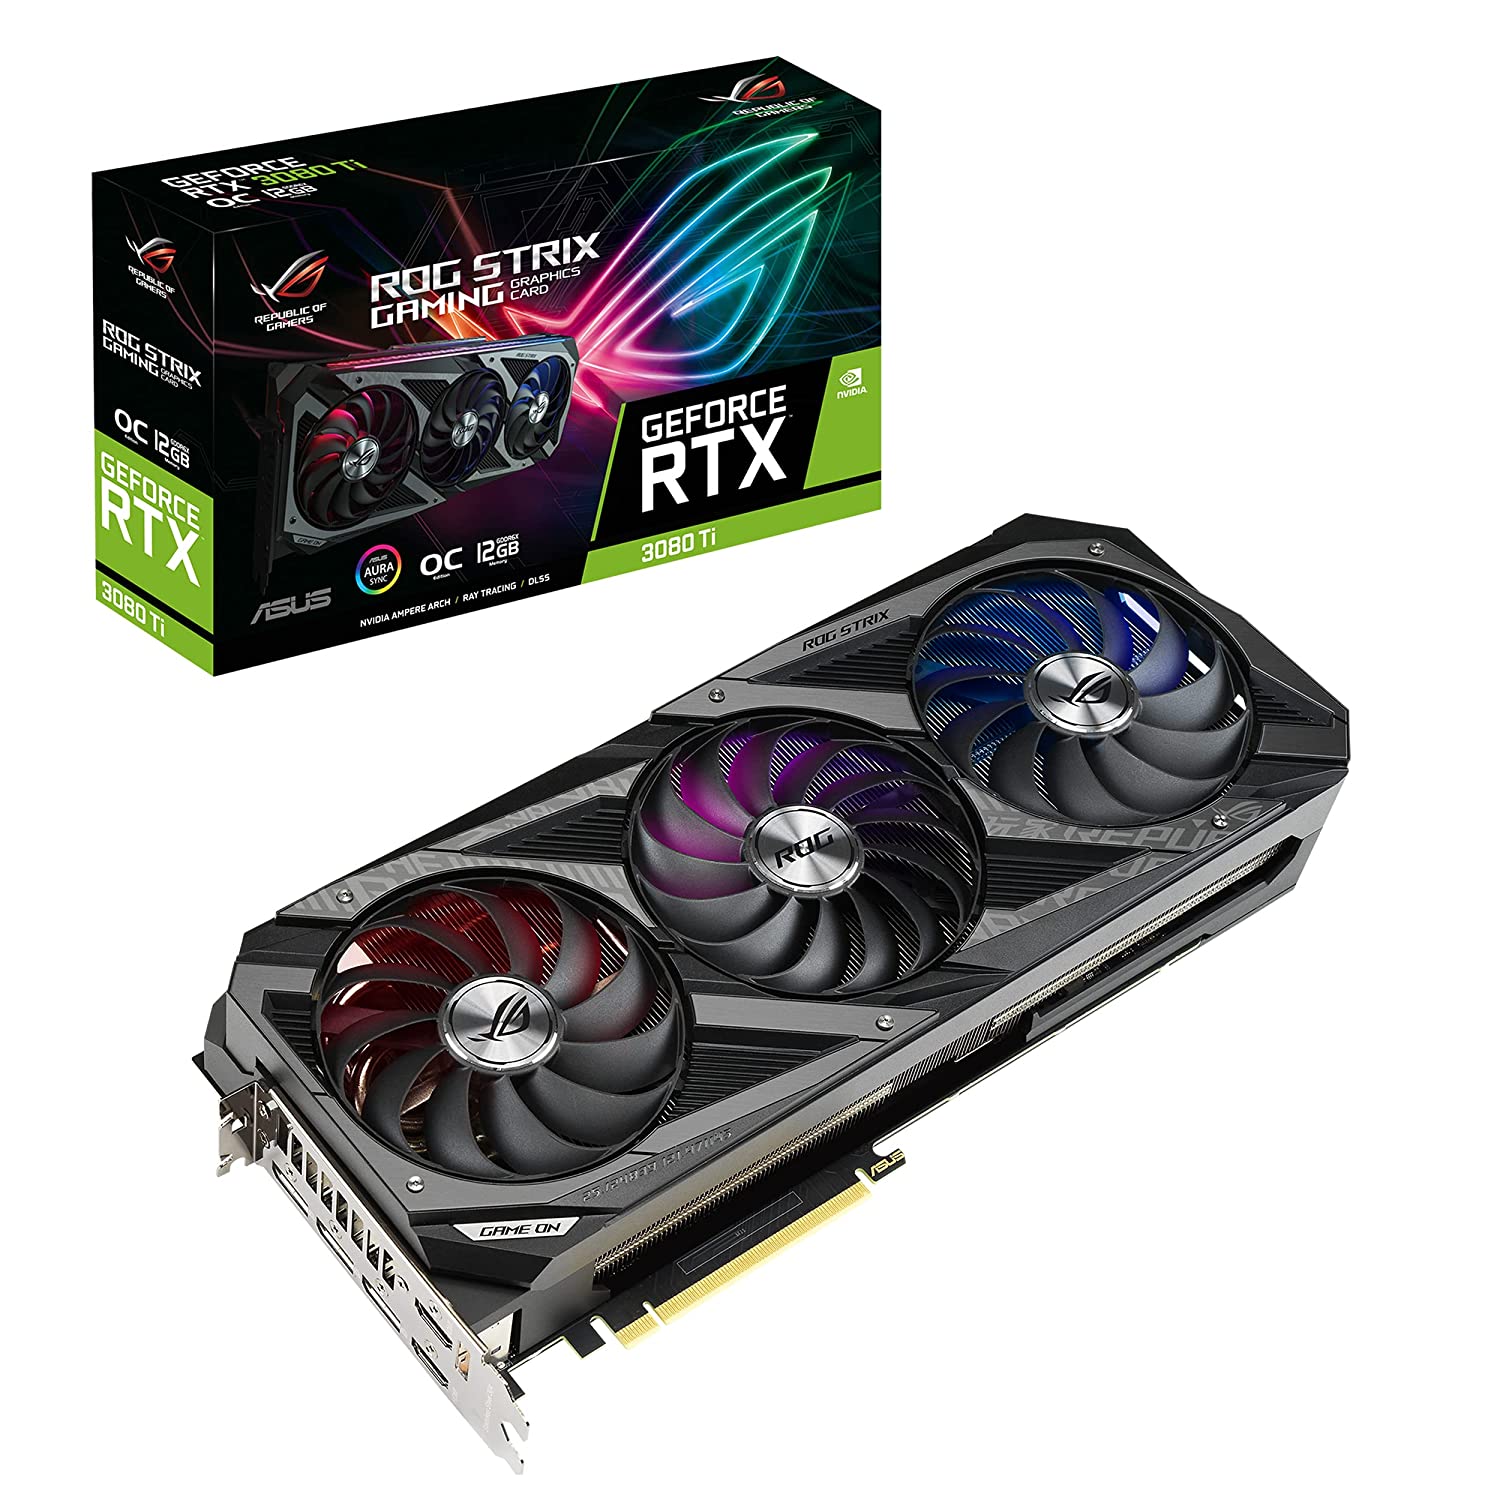 ASUS ROG Strix NVIDIA GeForce RTX 3080 Ti OC Edition Gaming Graphics Card (pci_e 4.0, 12GB GDDR6X, HDMI 2.1, DisplayPort 1.4a, Axial-tech Fan Design